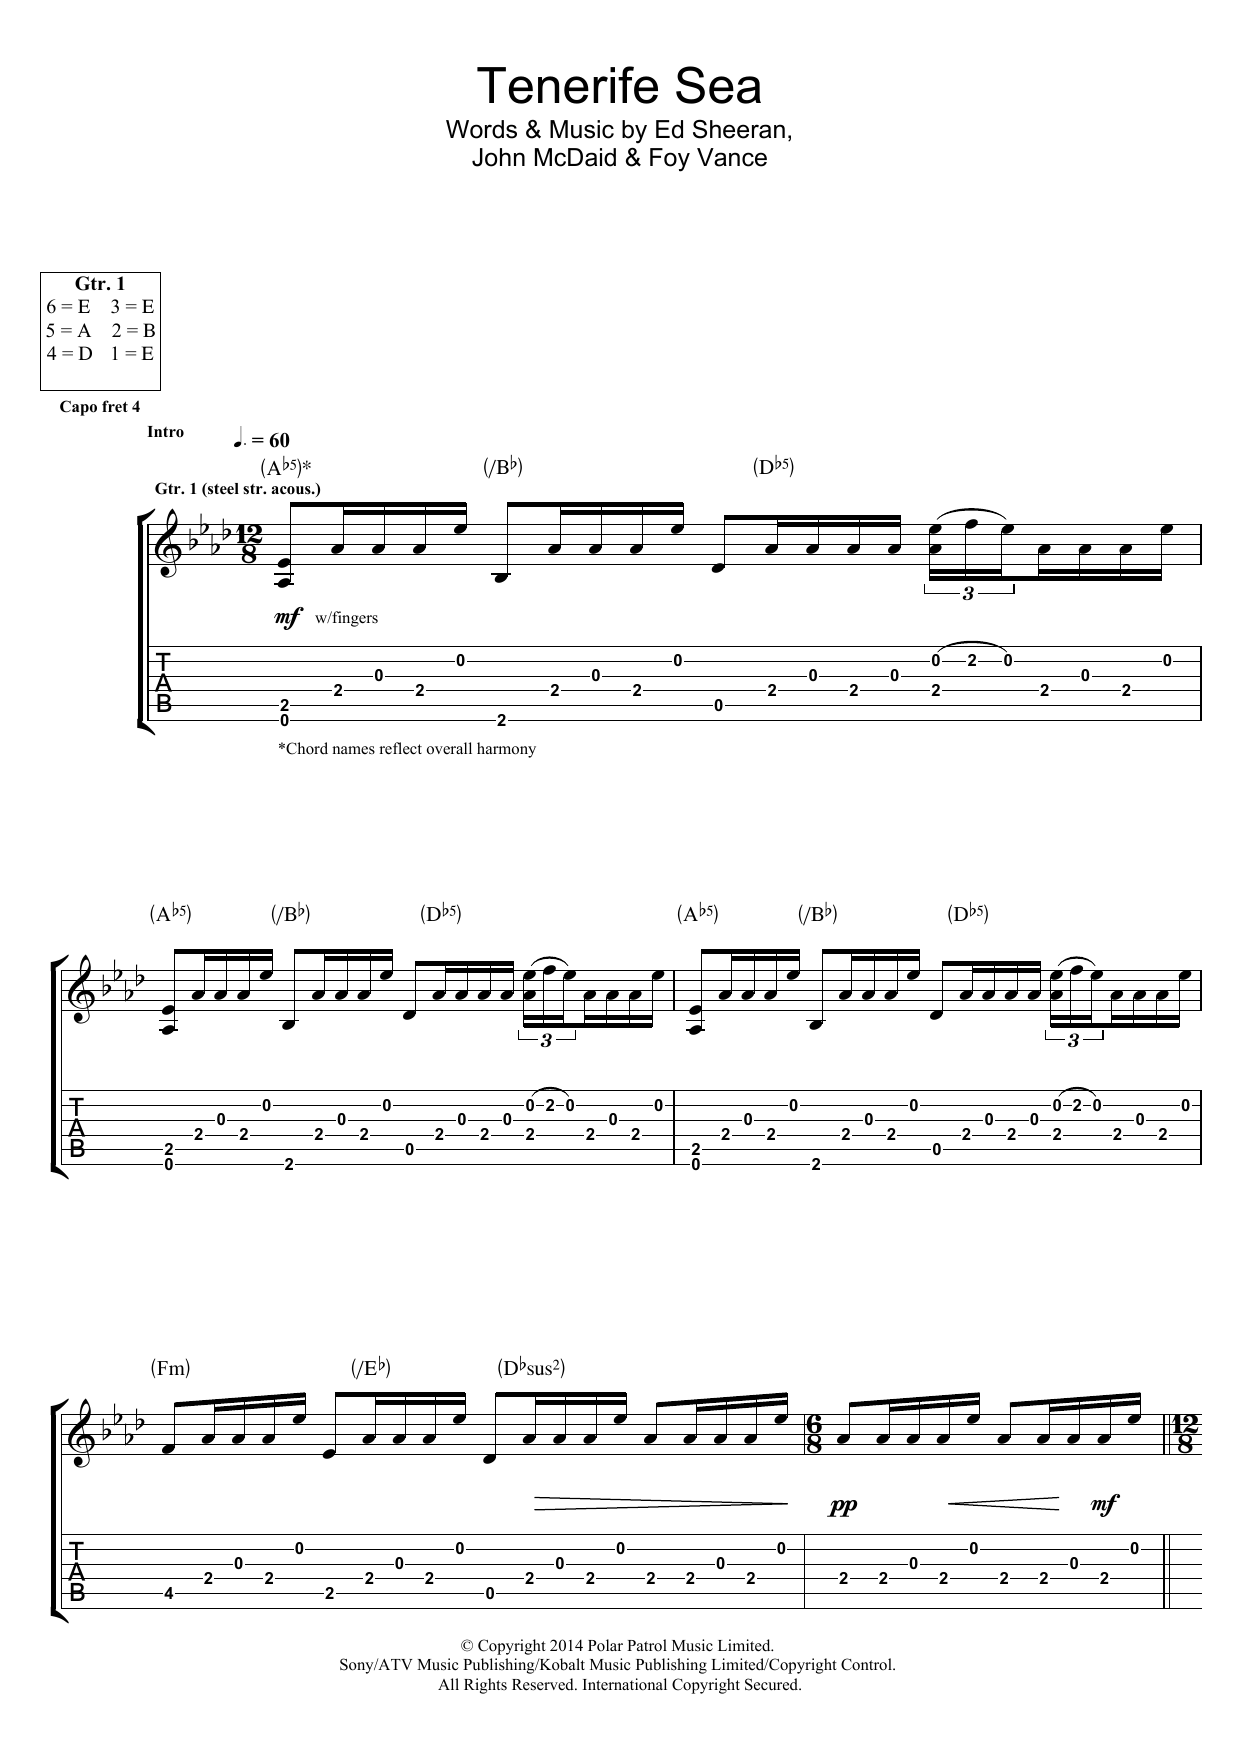 Download Ed Sheeran Tenerife Sea Sheet Music and learn how to play Guitar Tab PDF digital score in minutes